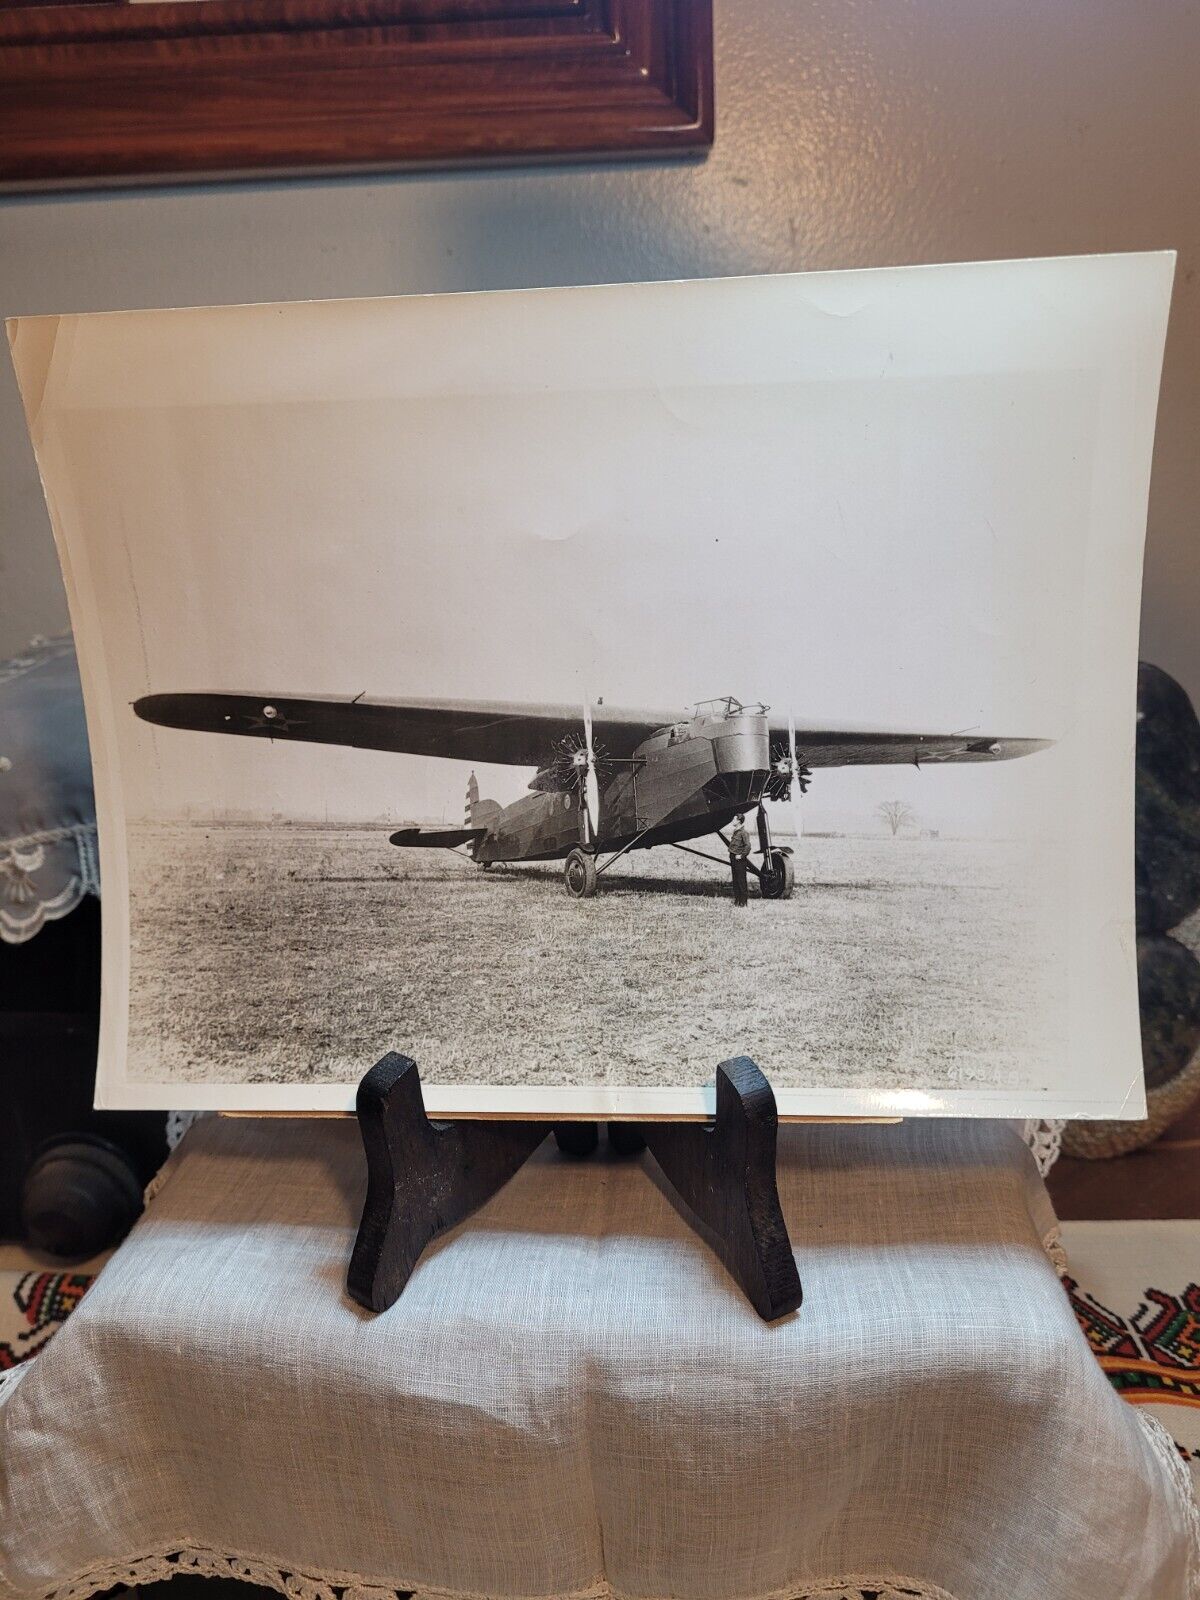 1942 Press Photo The Atlantic LB-2 Bomber Representing The New Development By...